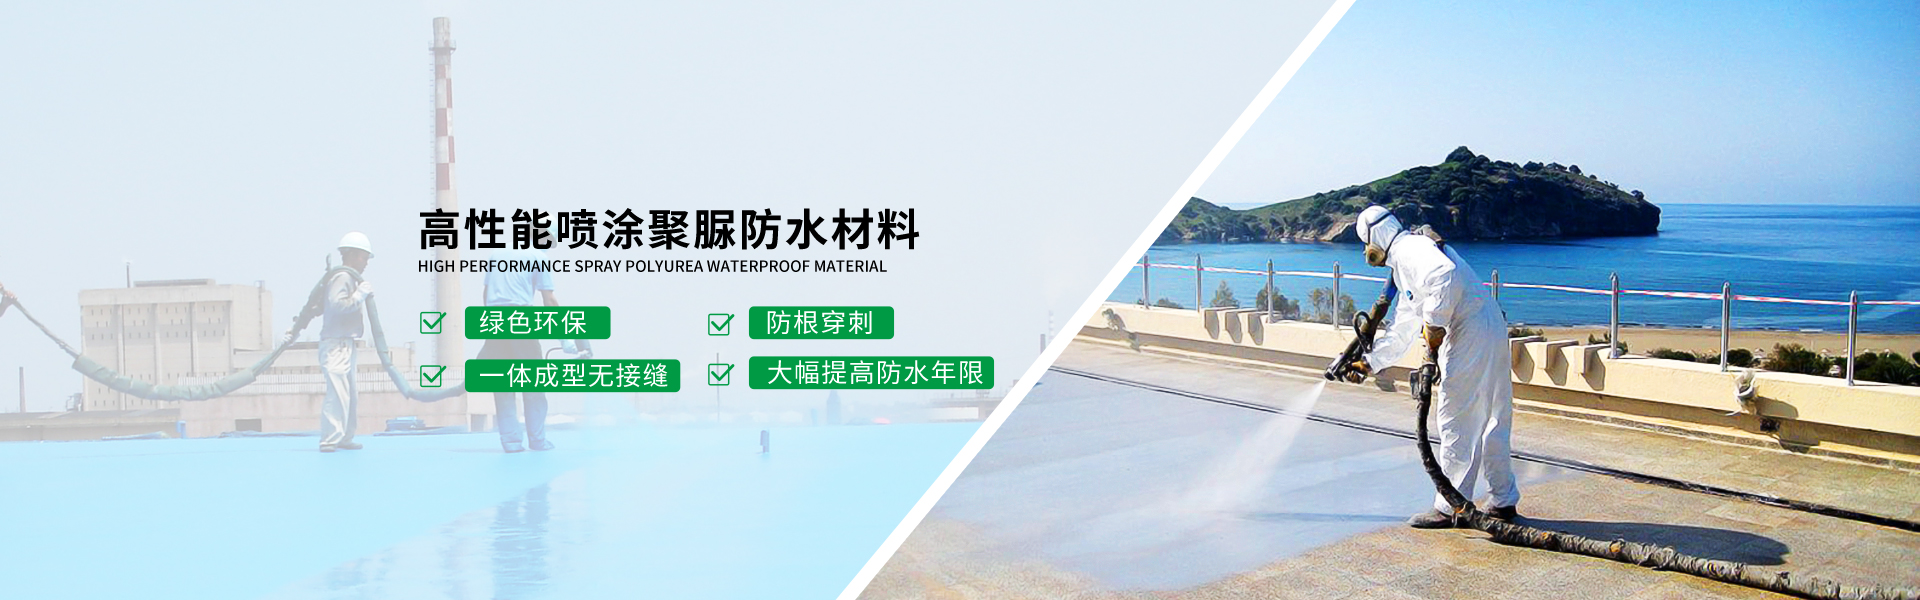 e体育官网·(中国)有限责任公司主营聚脲防水,防水材料等产品